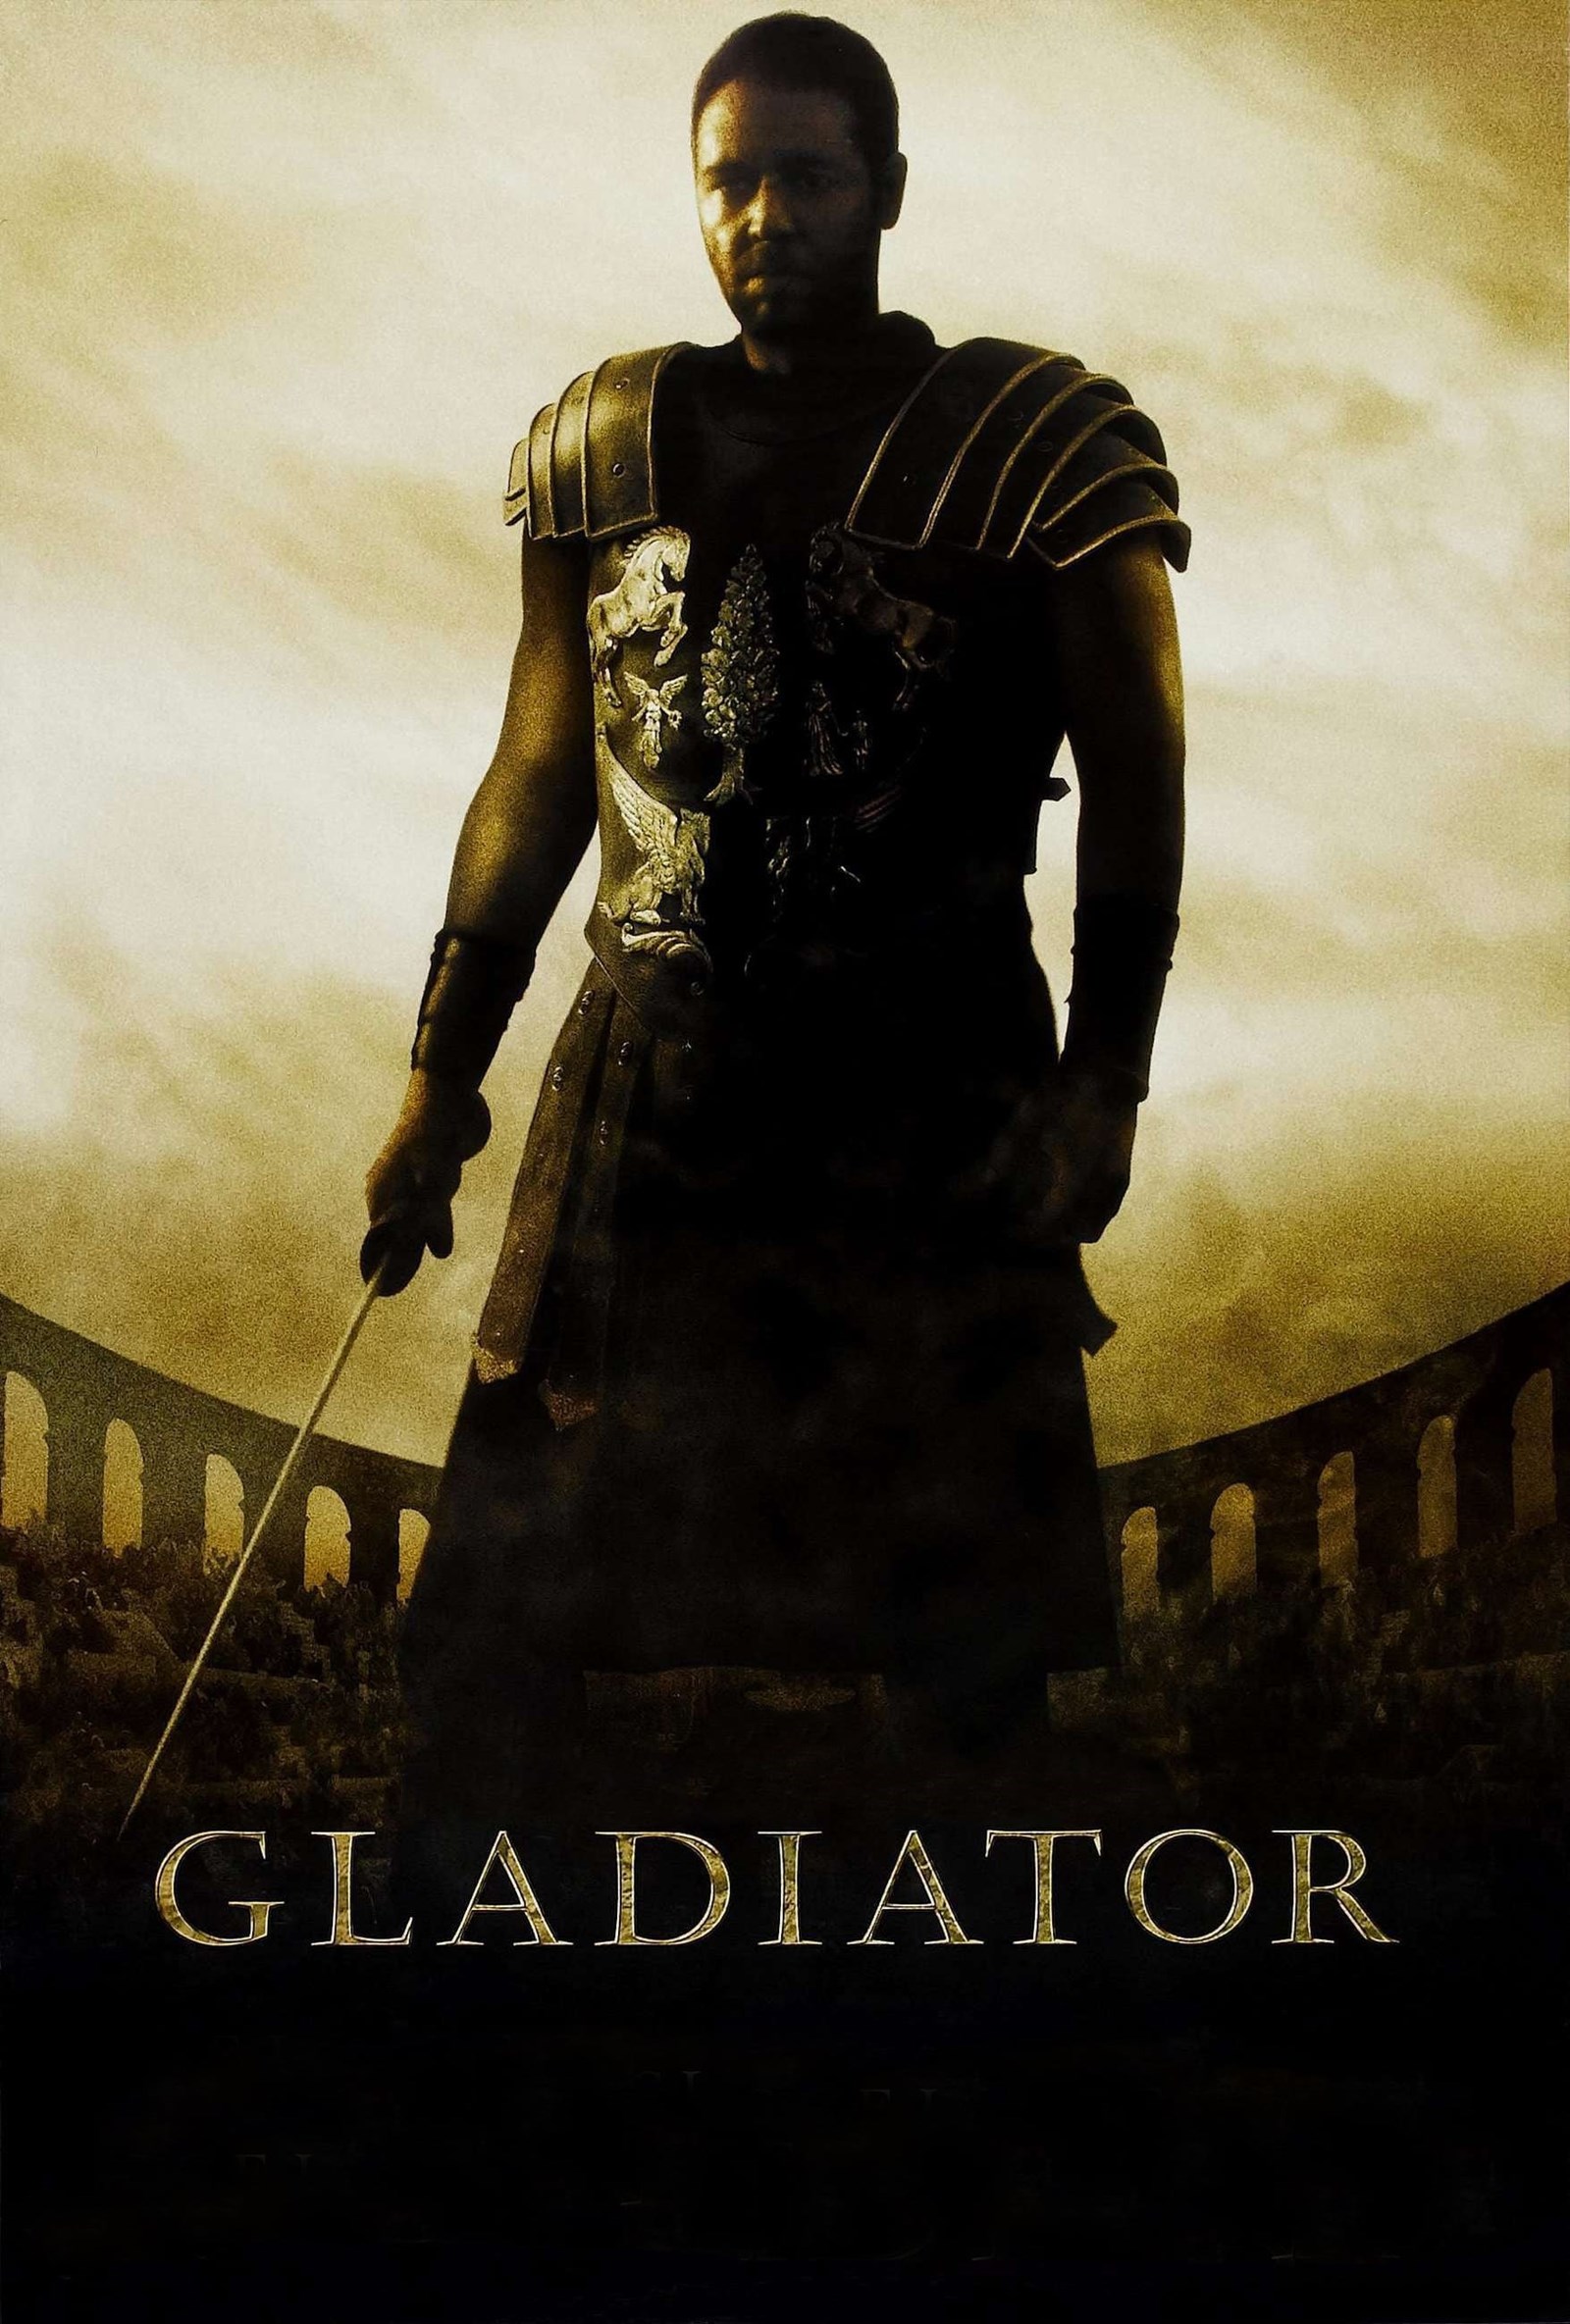 Gladiator (2000) 4K quality